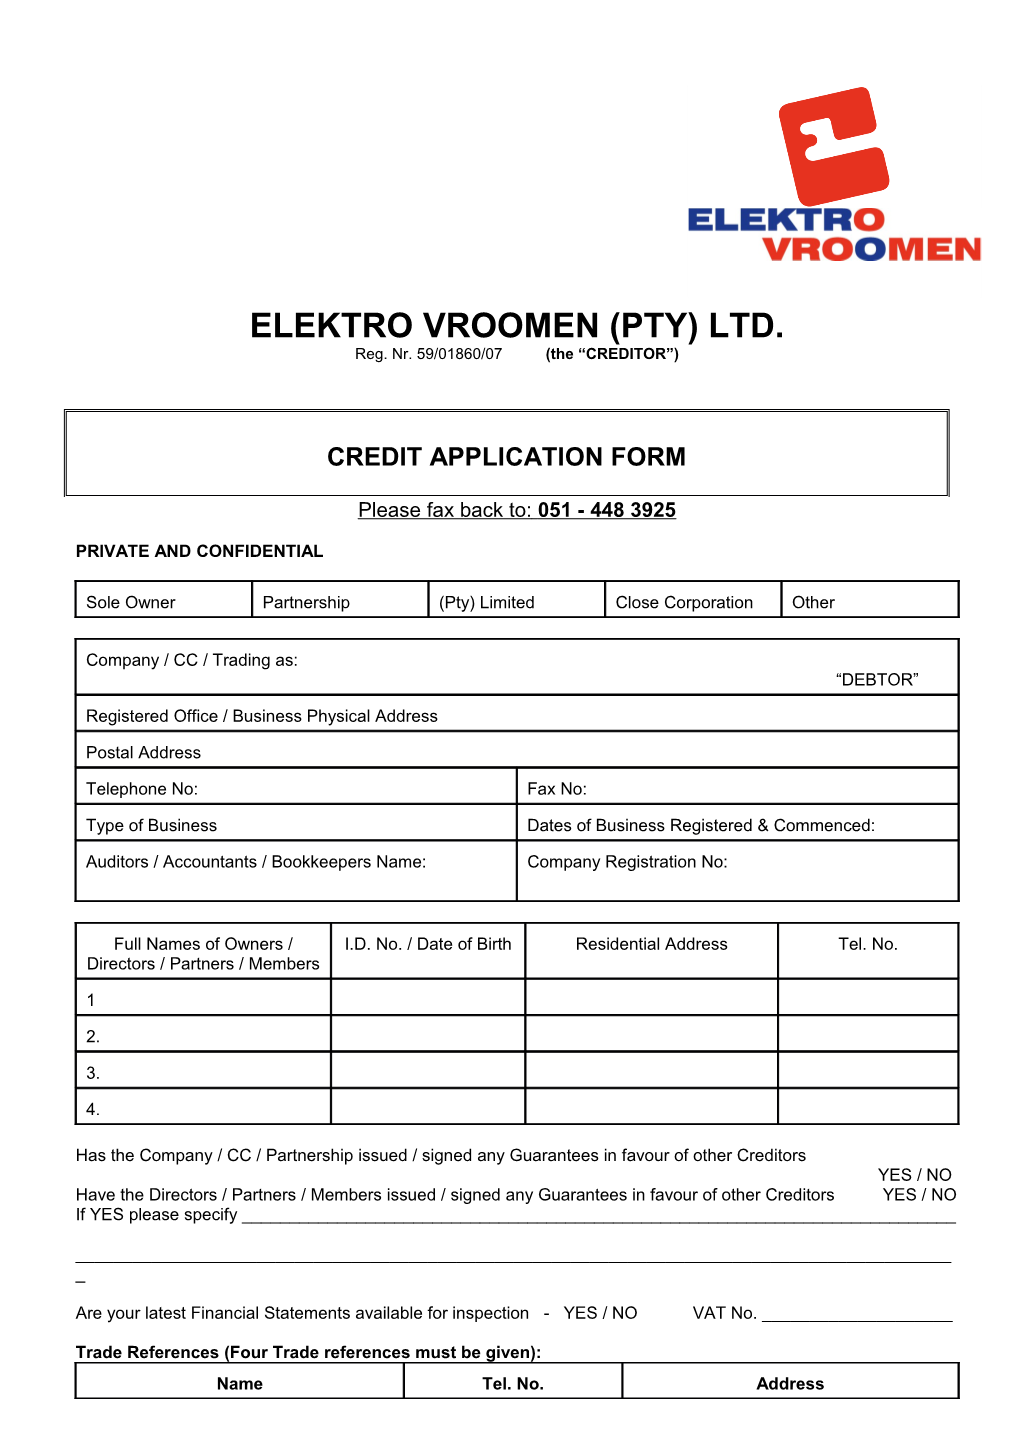 Elektro Vroomen (Pty) Ltd